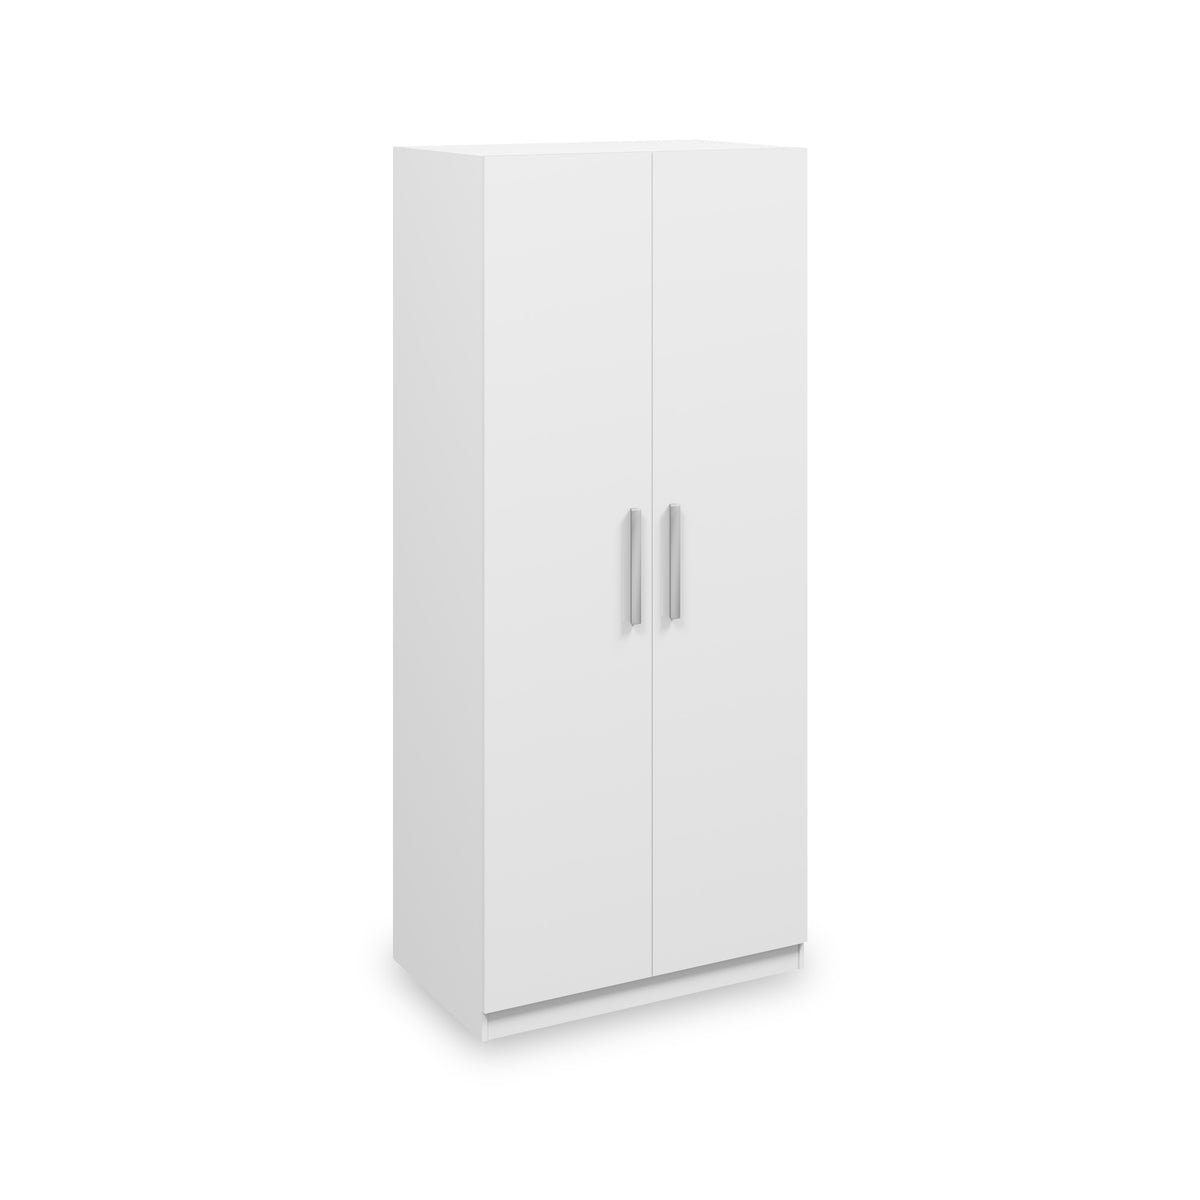 Meribel White 2 Door Wardrobe from Roseland Furniture